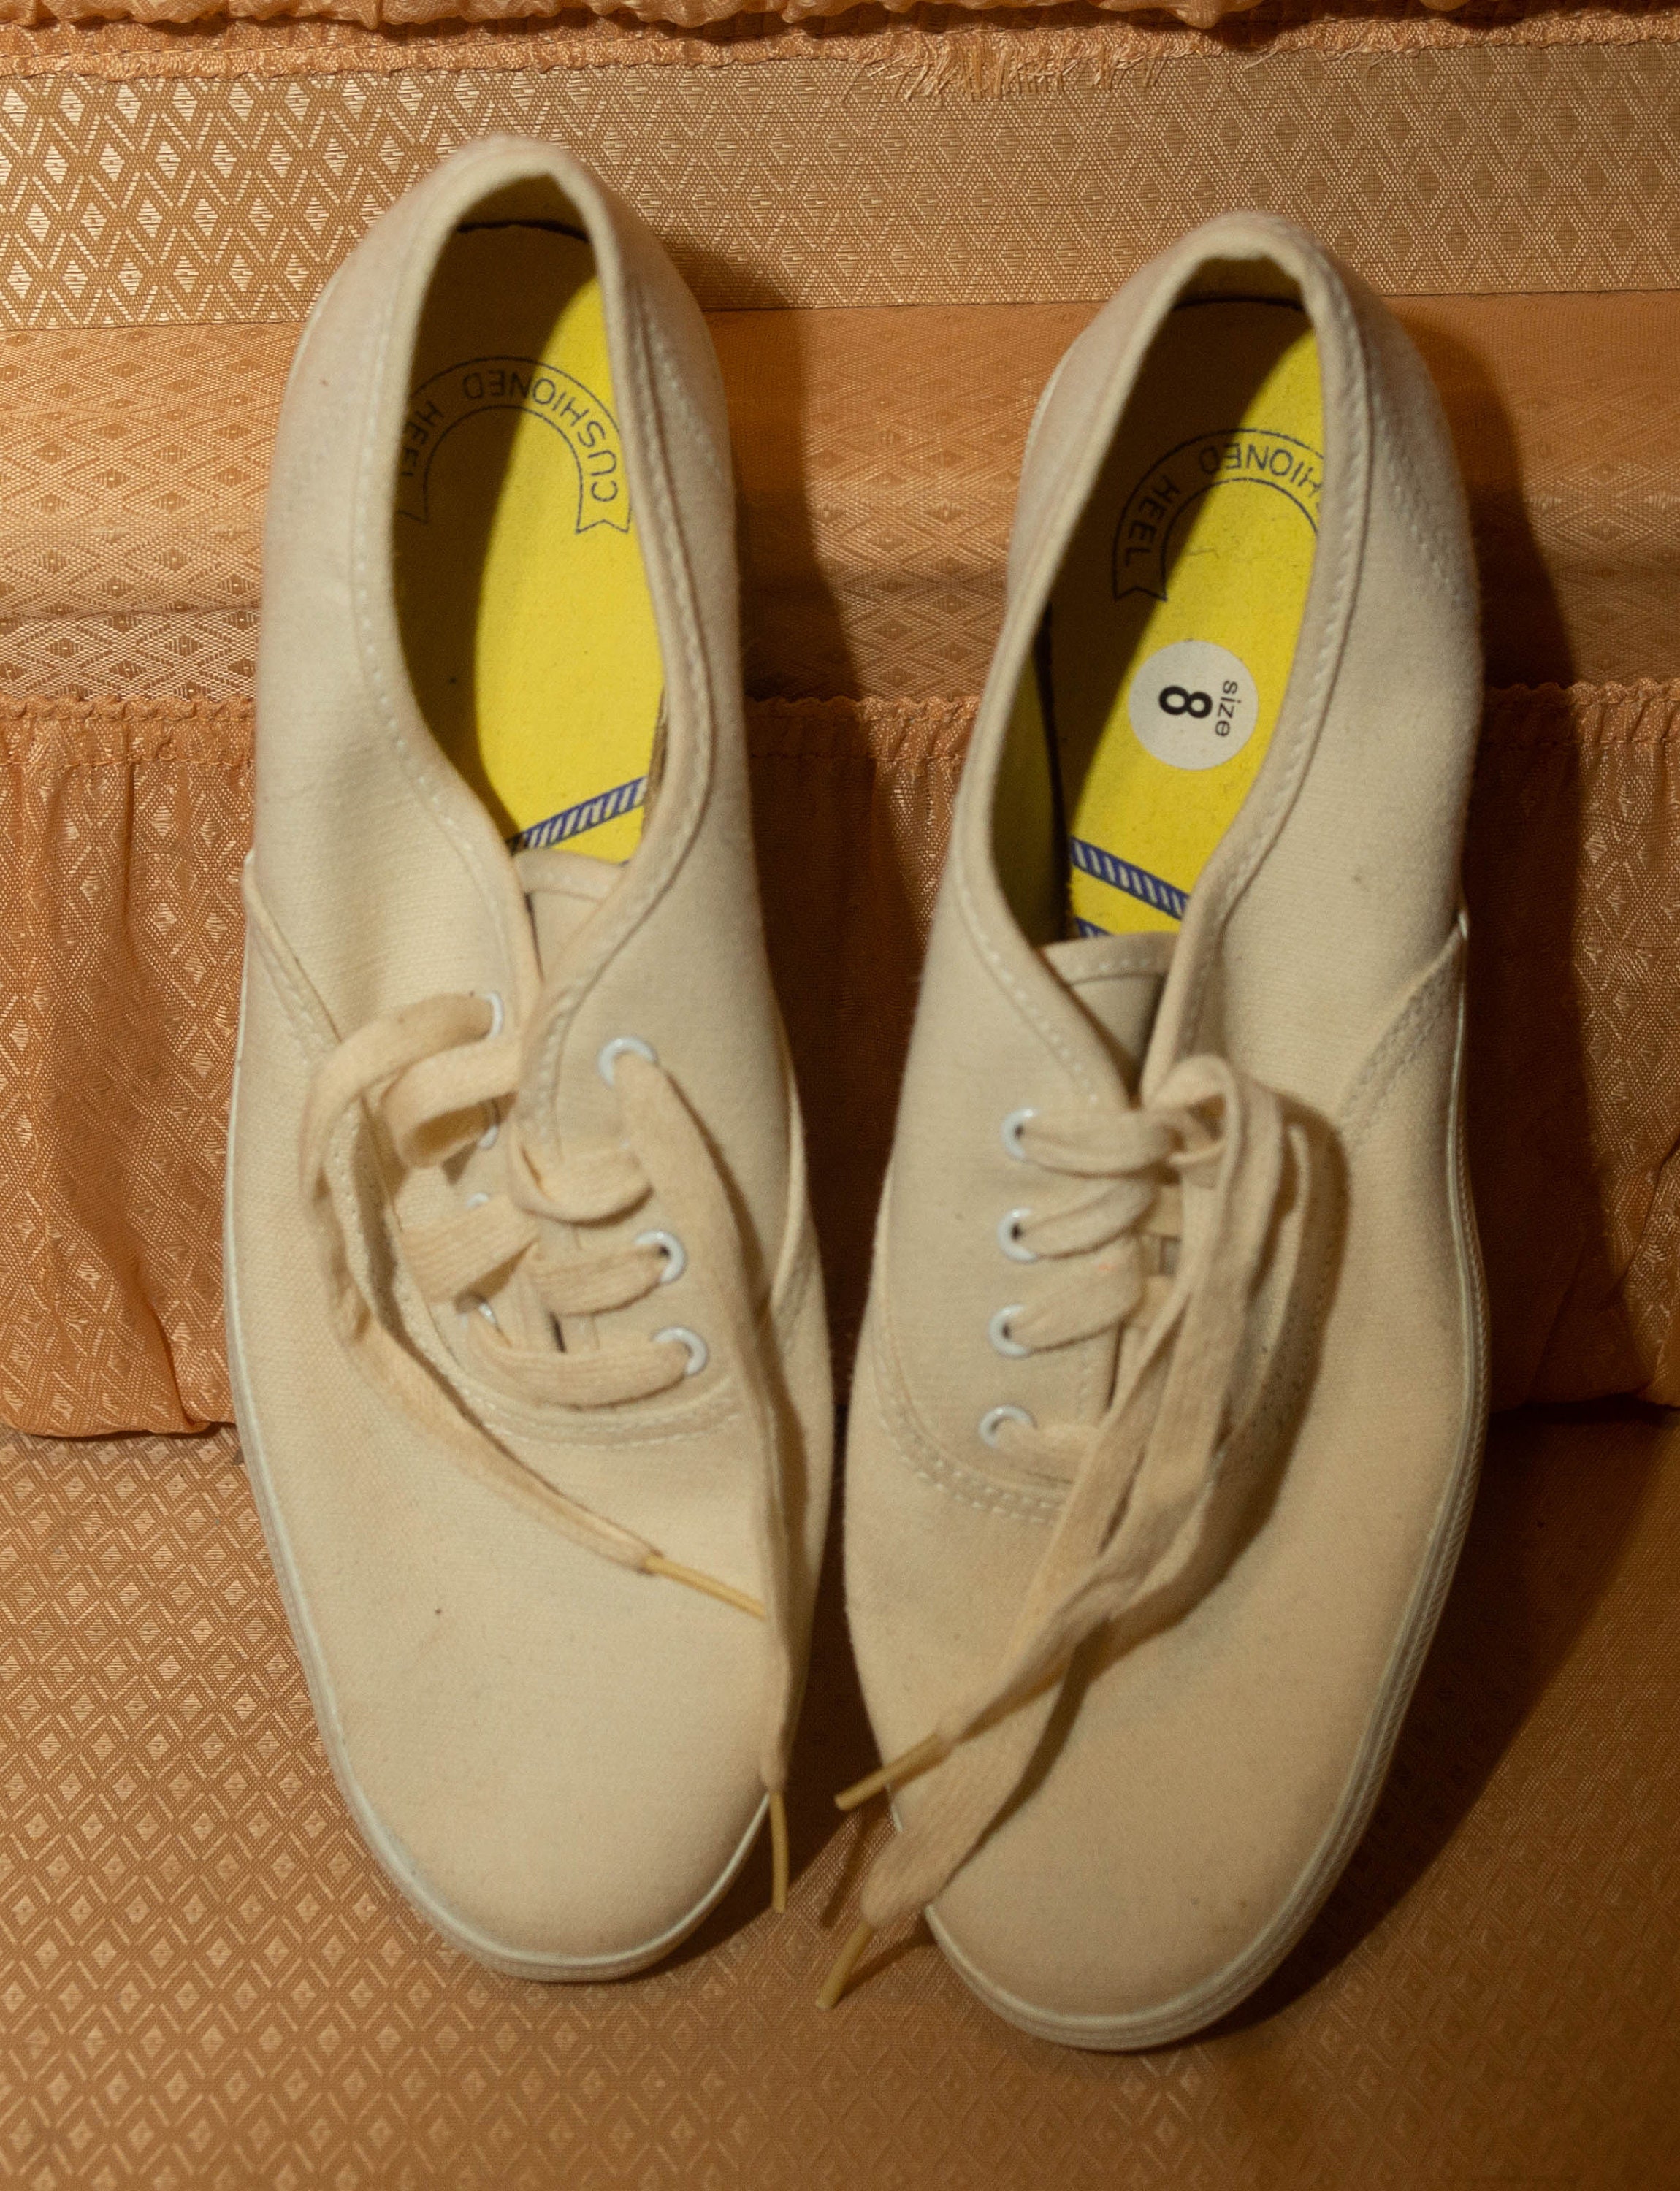 Overleg Pas op Kraan Vintage Keds Sneakers 70s Mod Lace Canvas Shoes Size 8 - Etsy Hong Kong